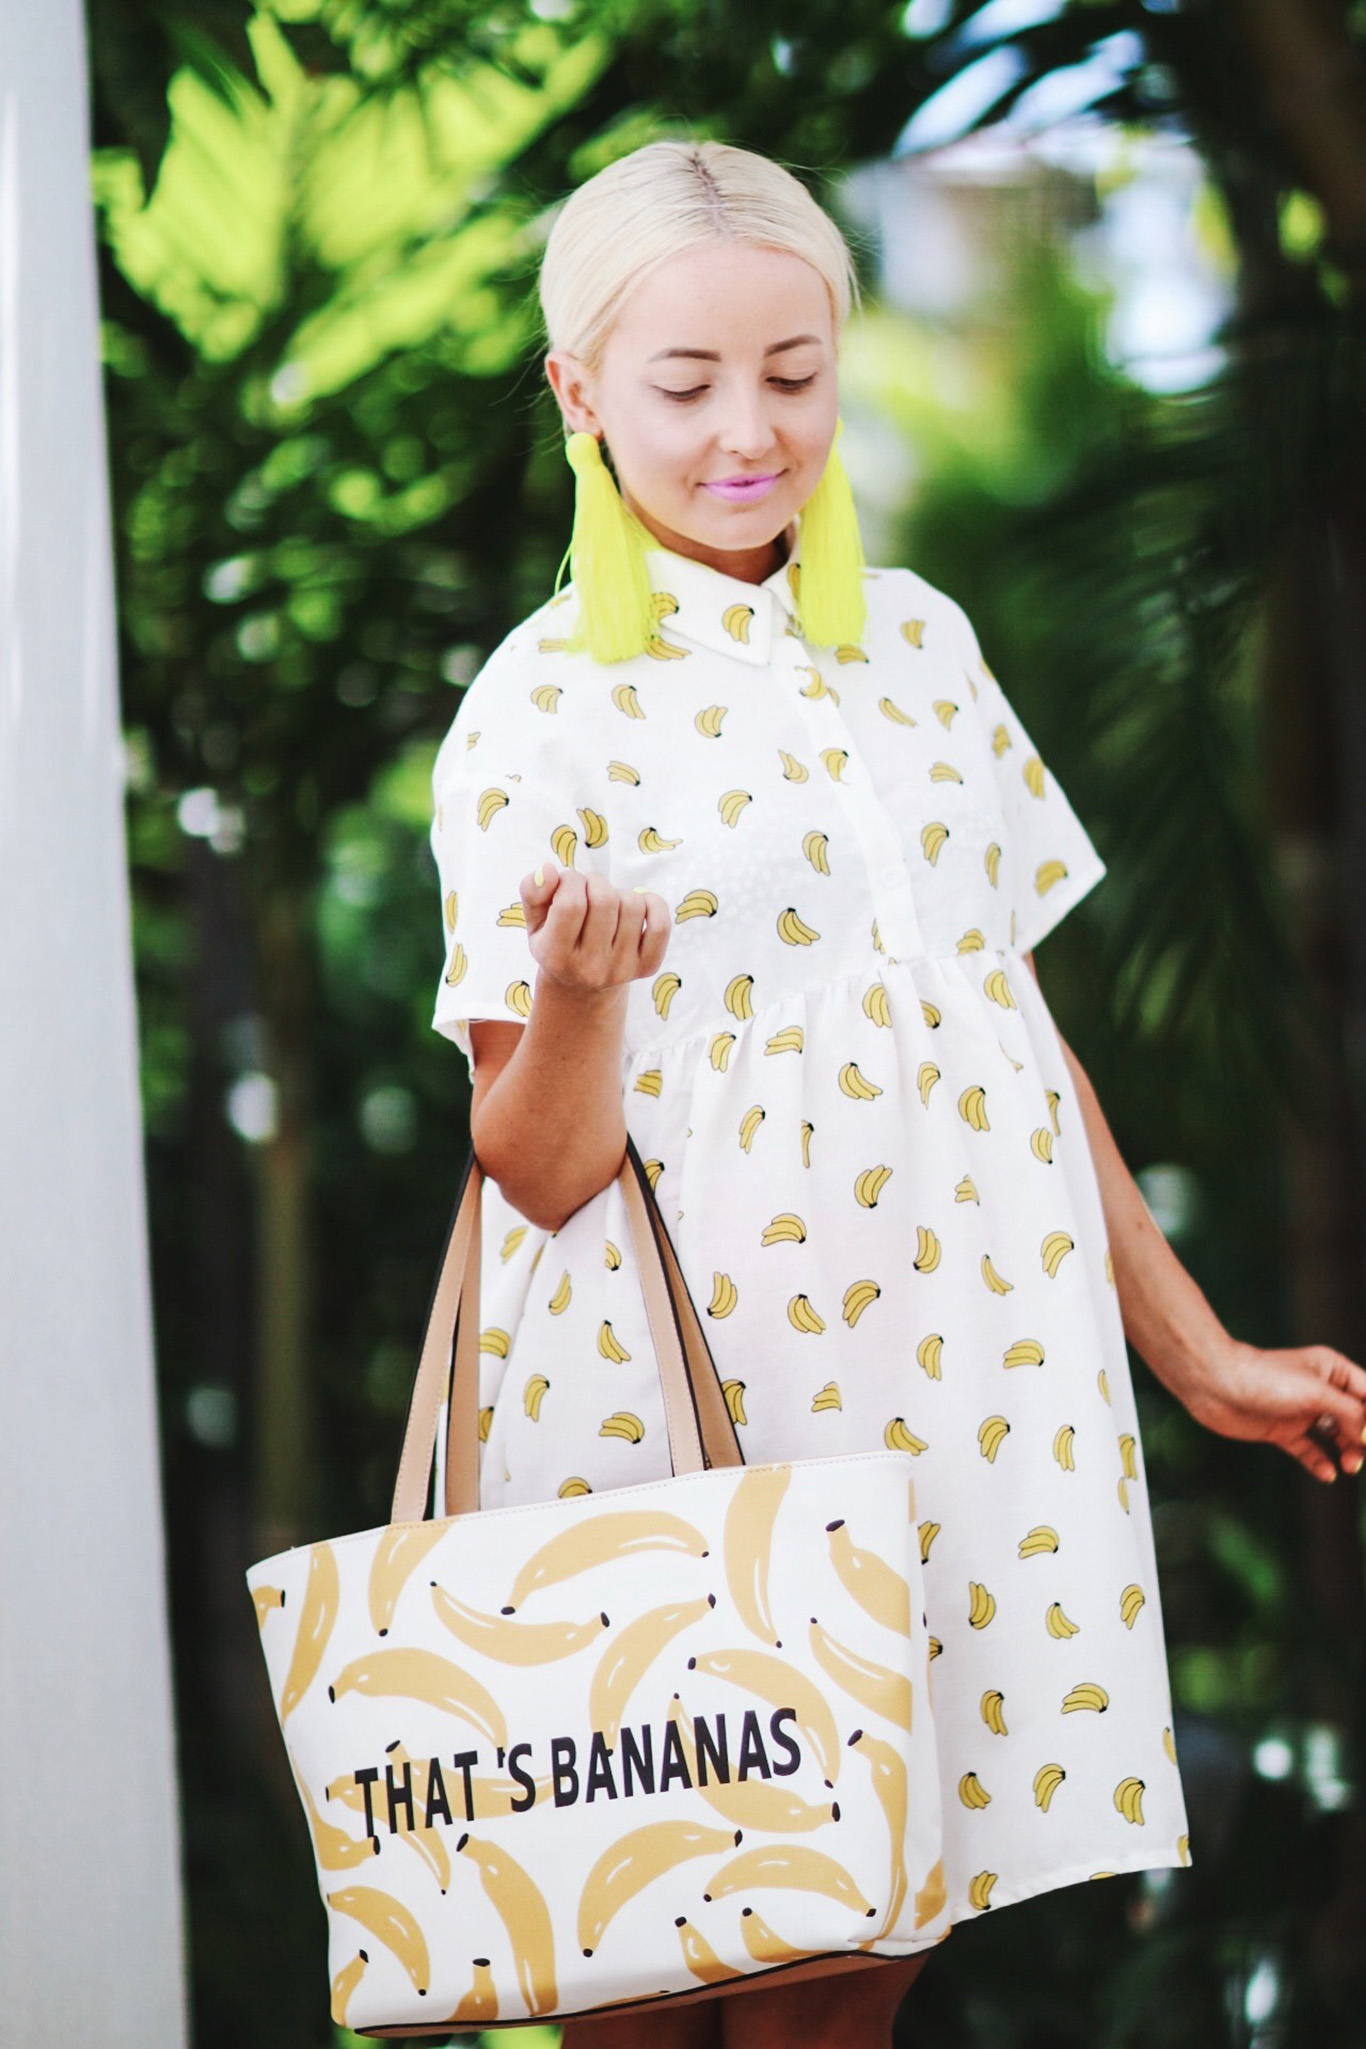 Alena Gidenko of modaprints.com styles a banana dress with pink sandals and a bannana bag